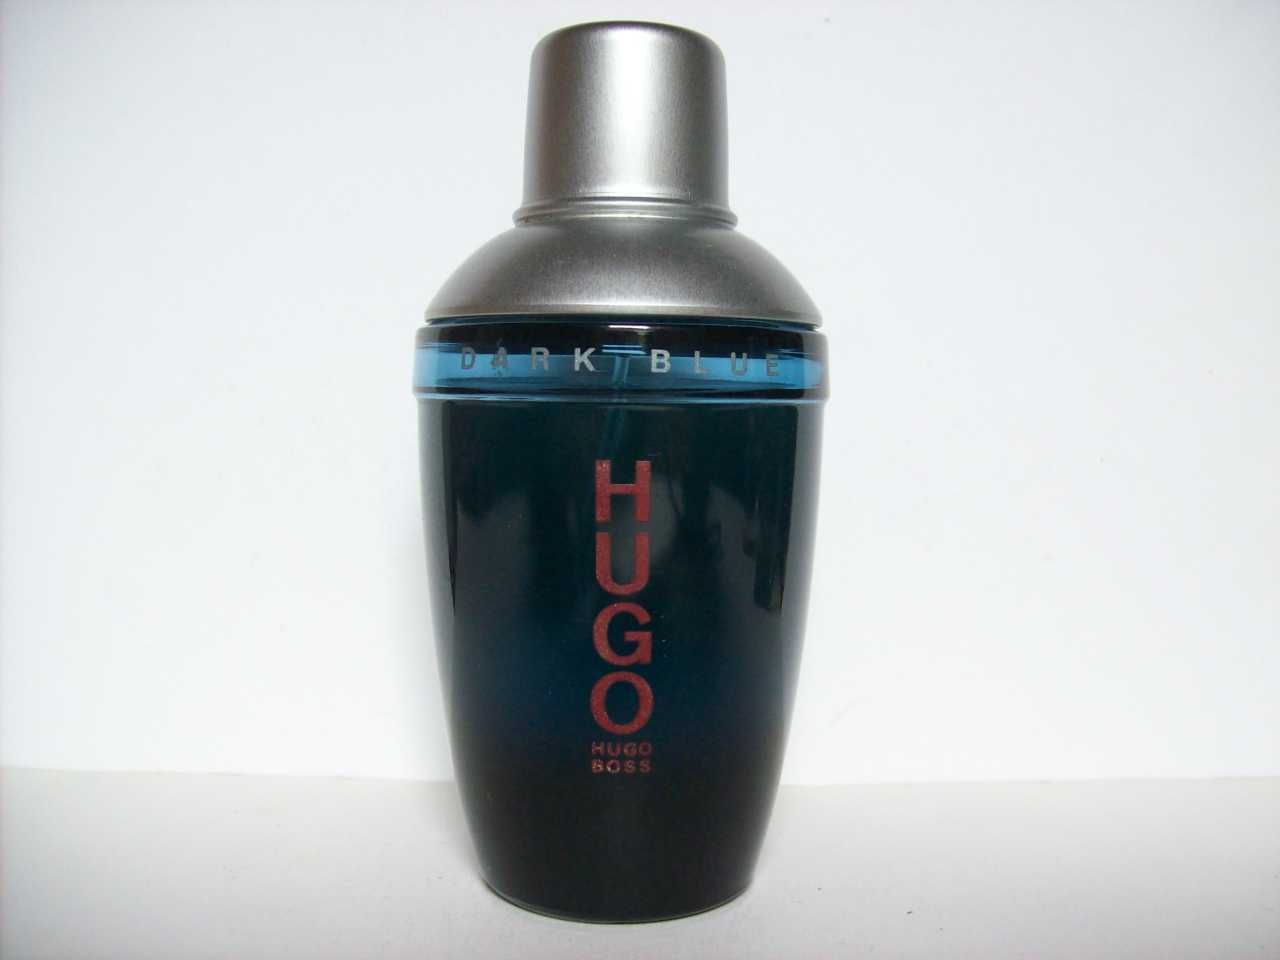 Hugo Boss Dark Blue - 75ml (2014)